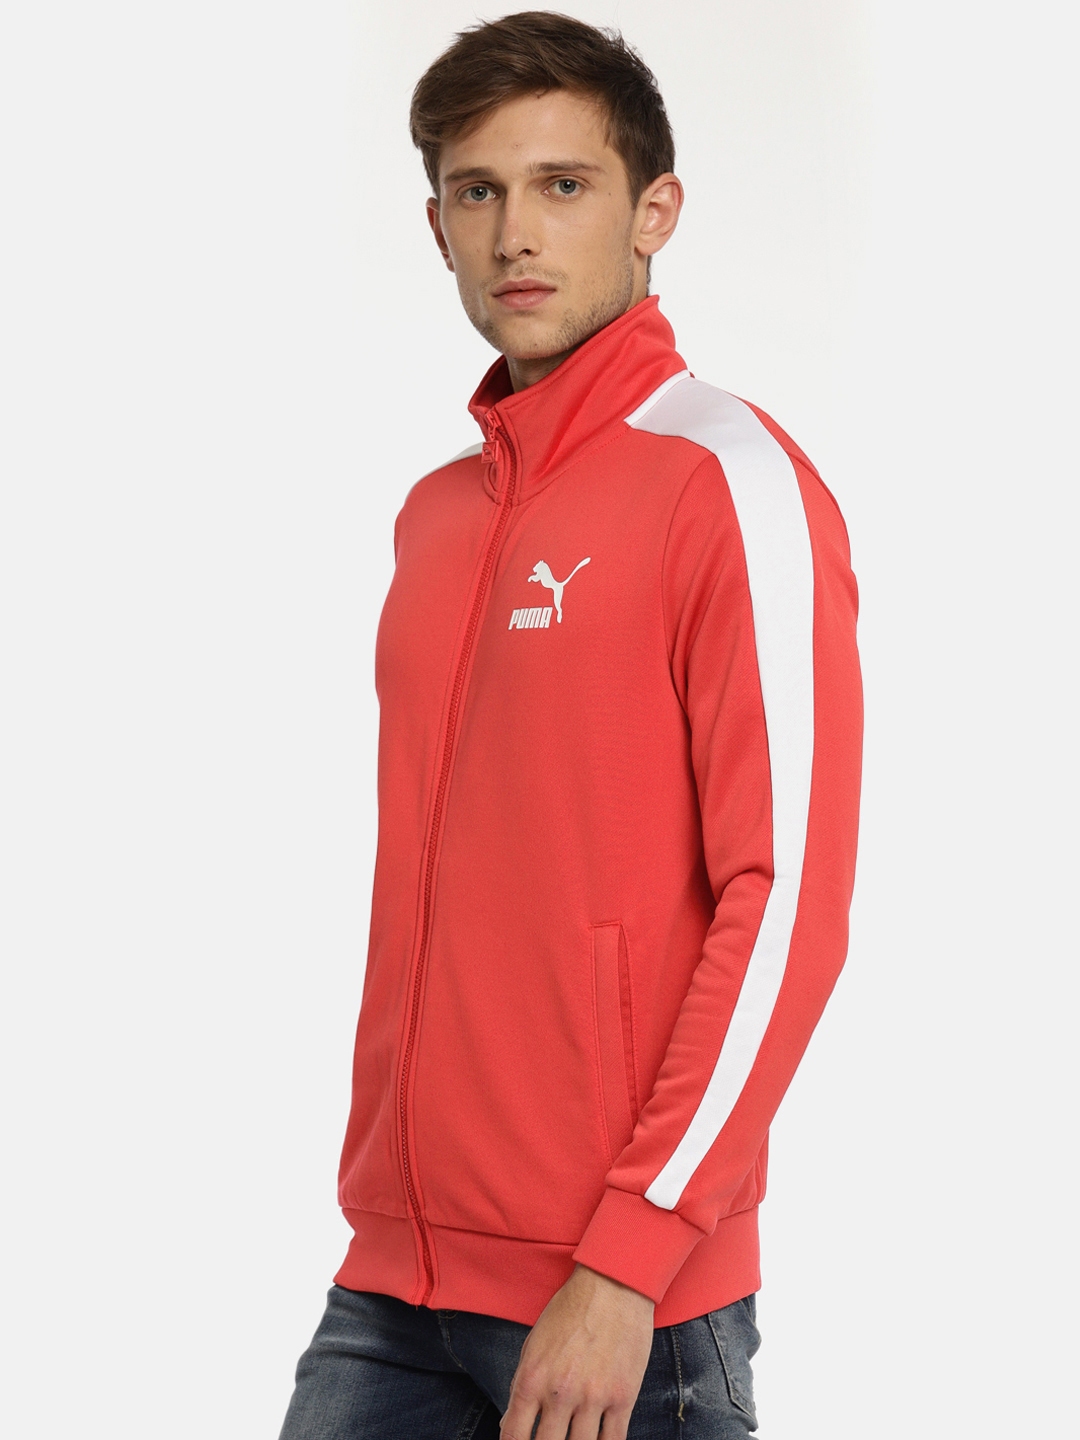 red puma track jacket